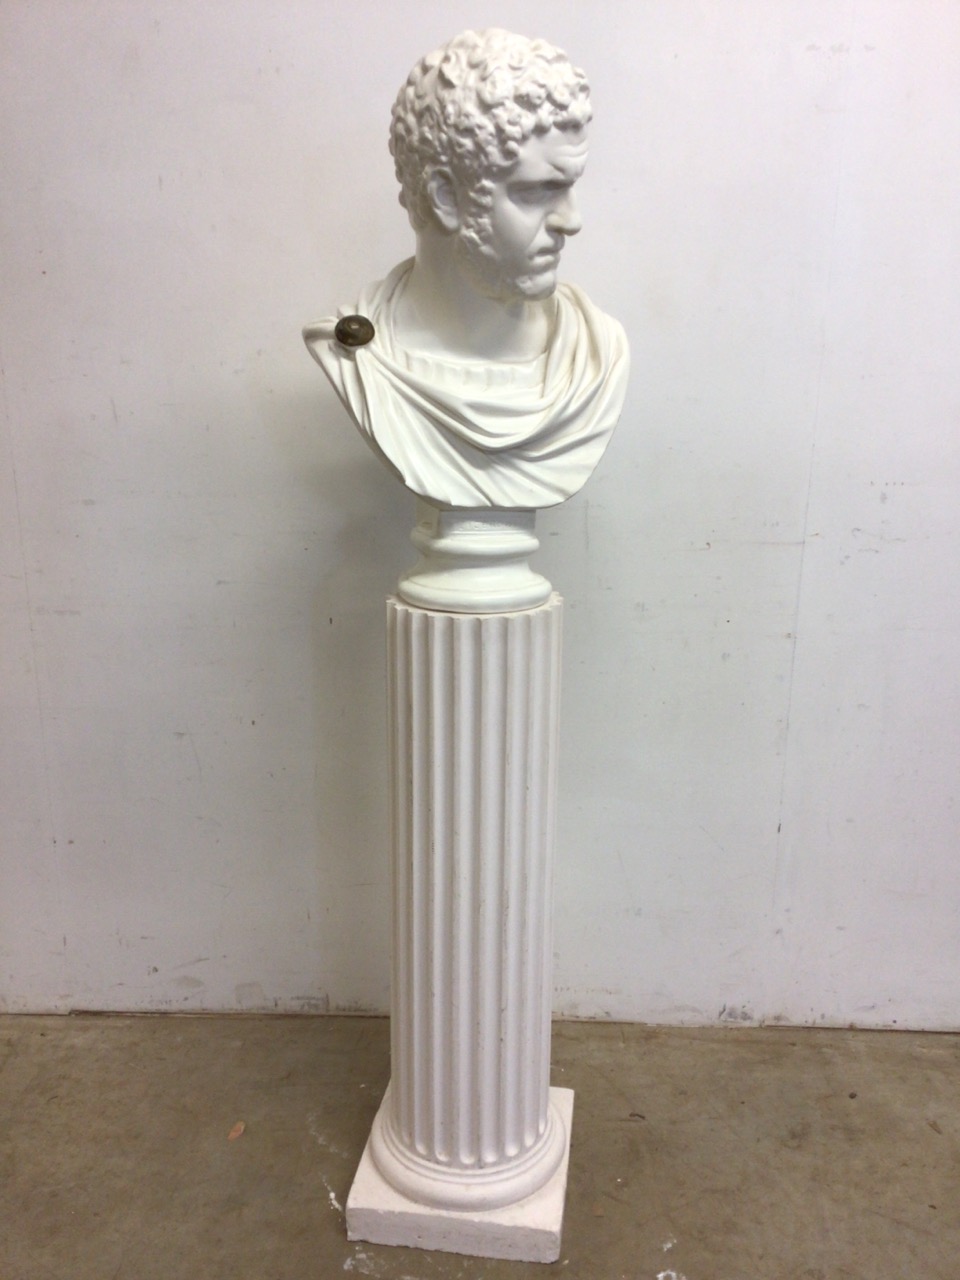 A plaster bust of Ciceroni on a pillar. H:150cm